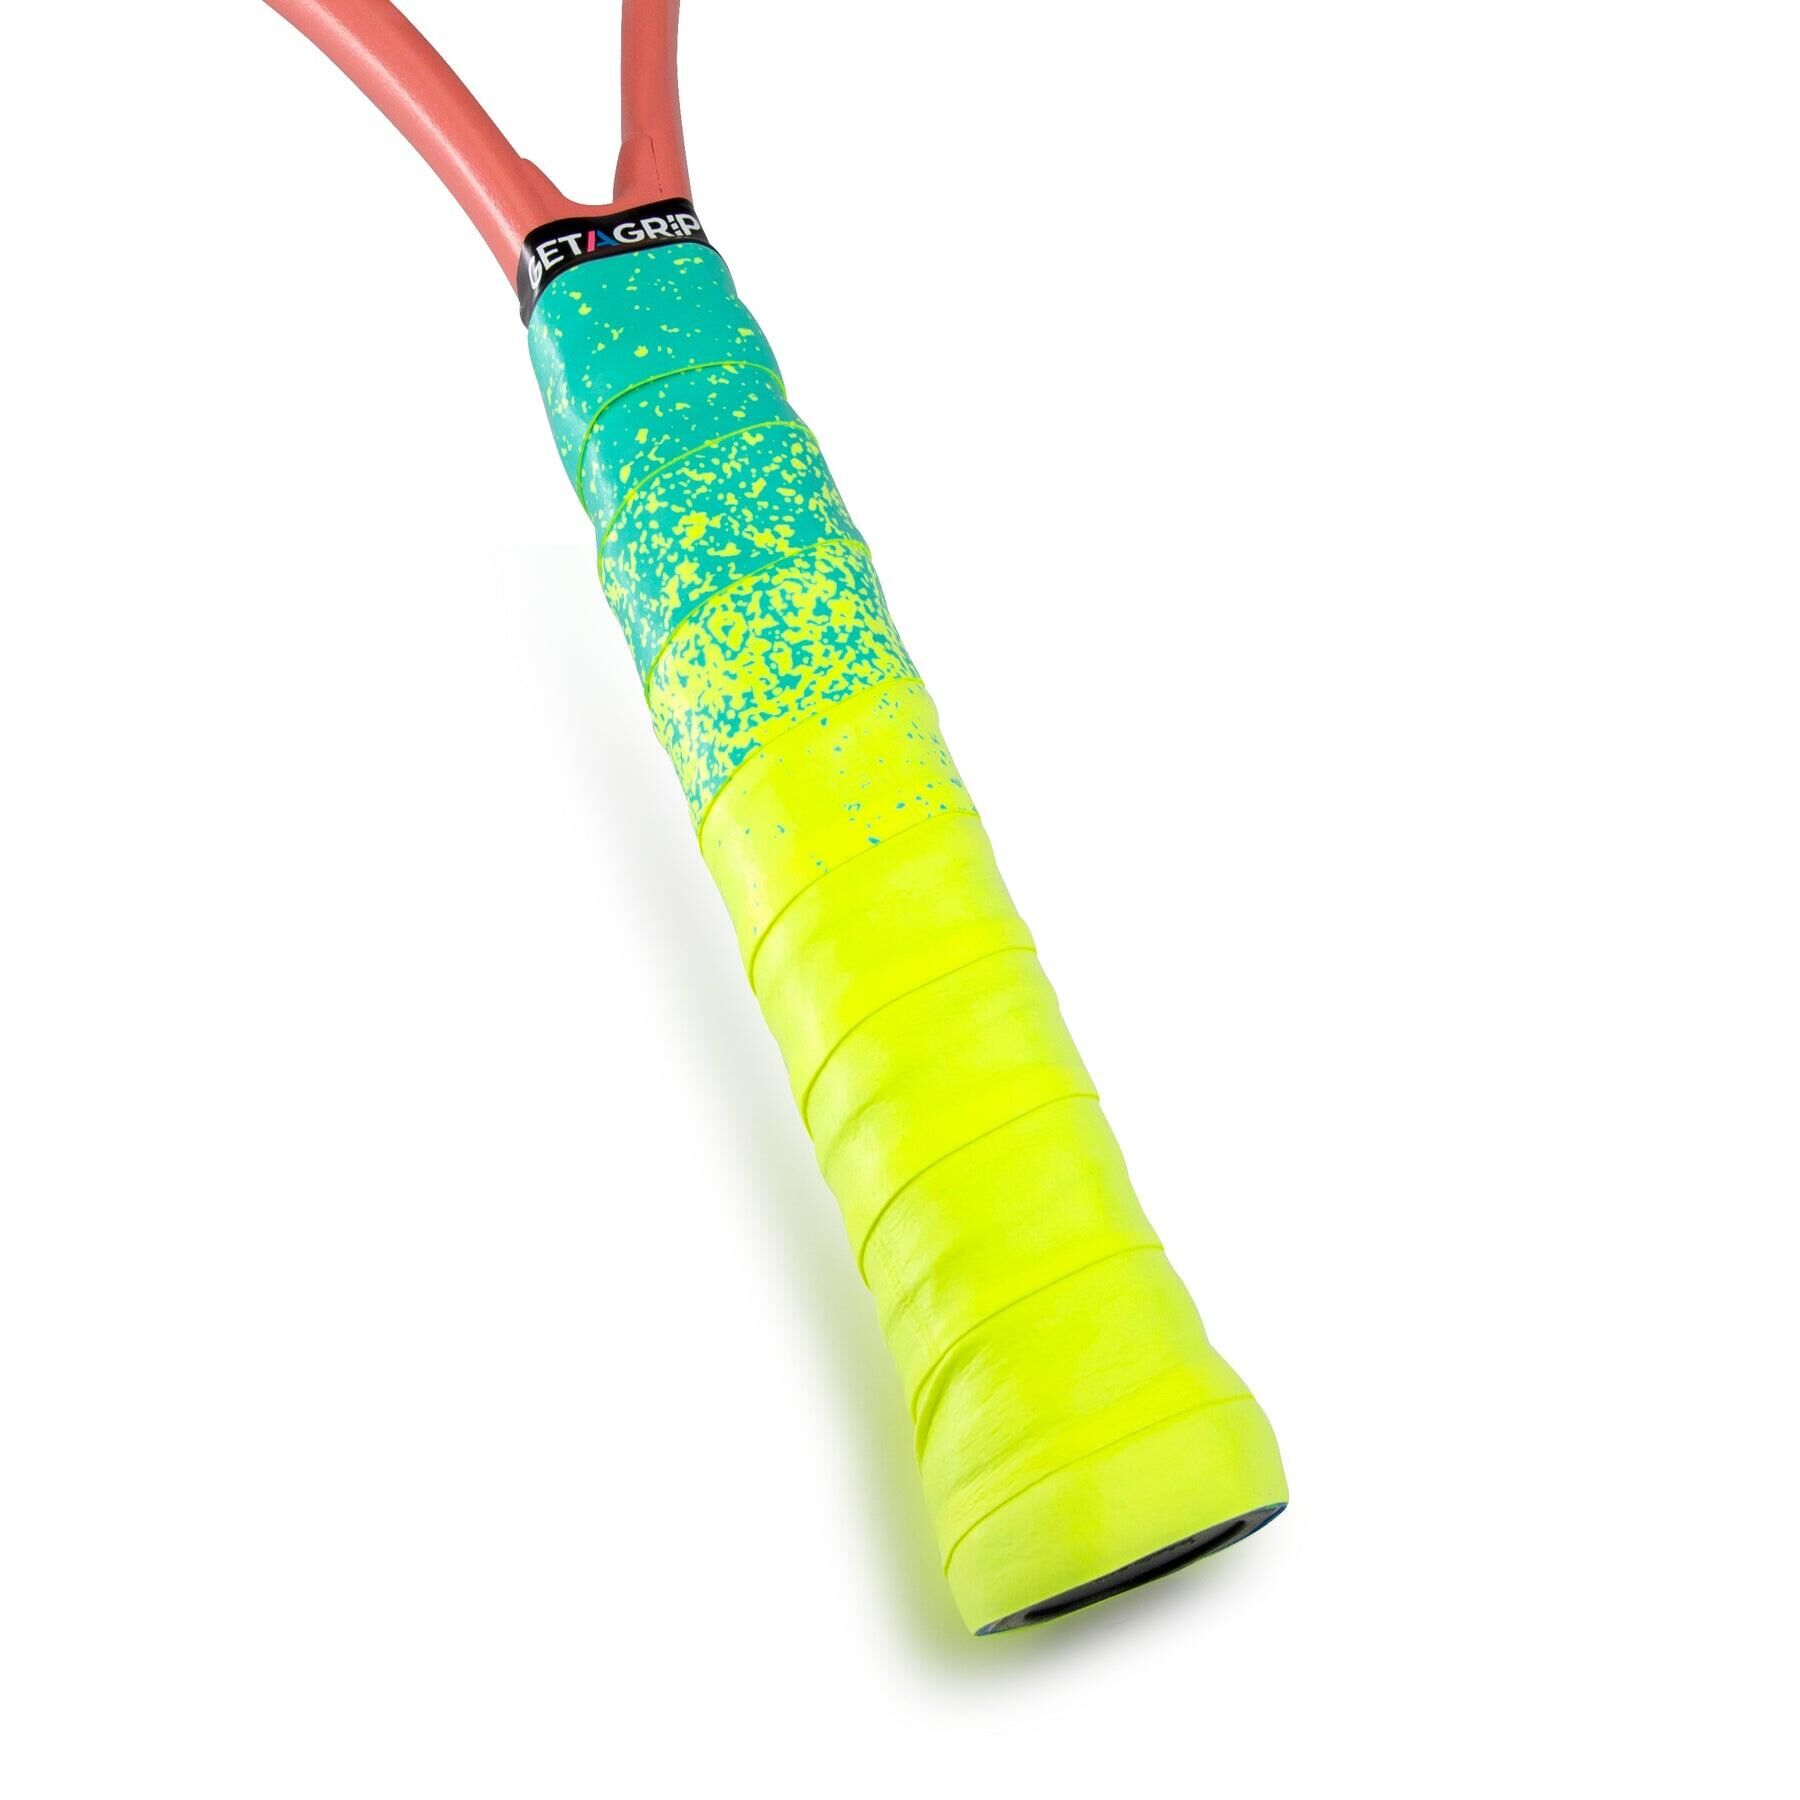 GET A GRIP Get A Grip Tennis Grips - Paint The Lines (Neon + Blue)